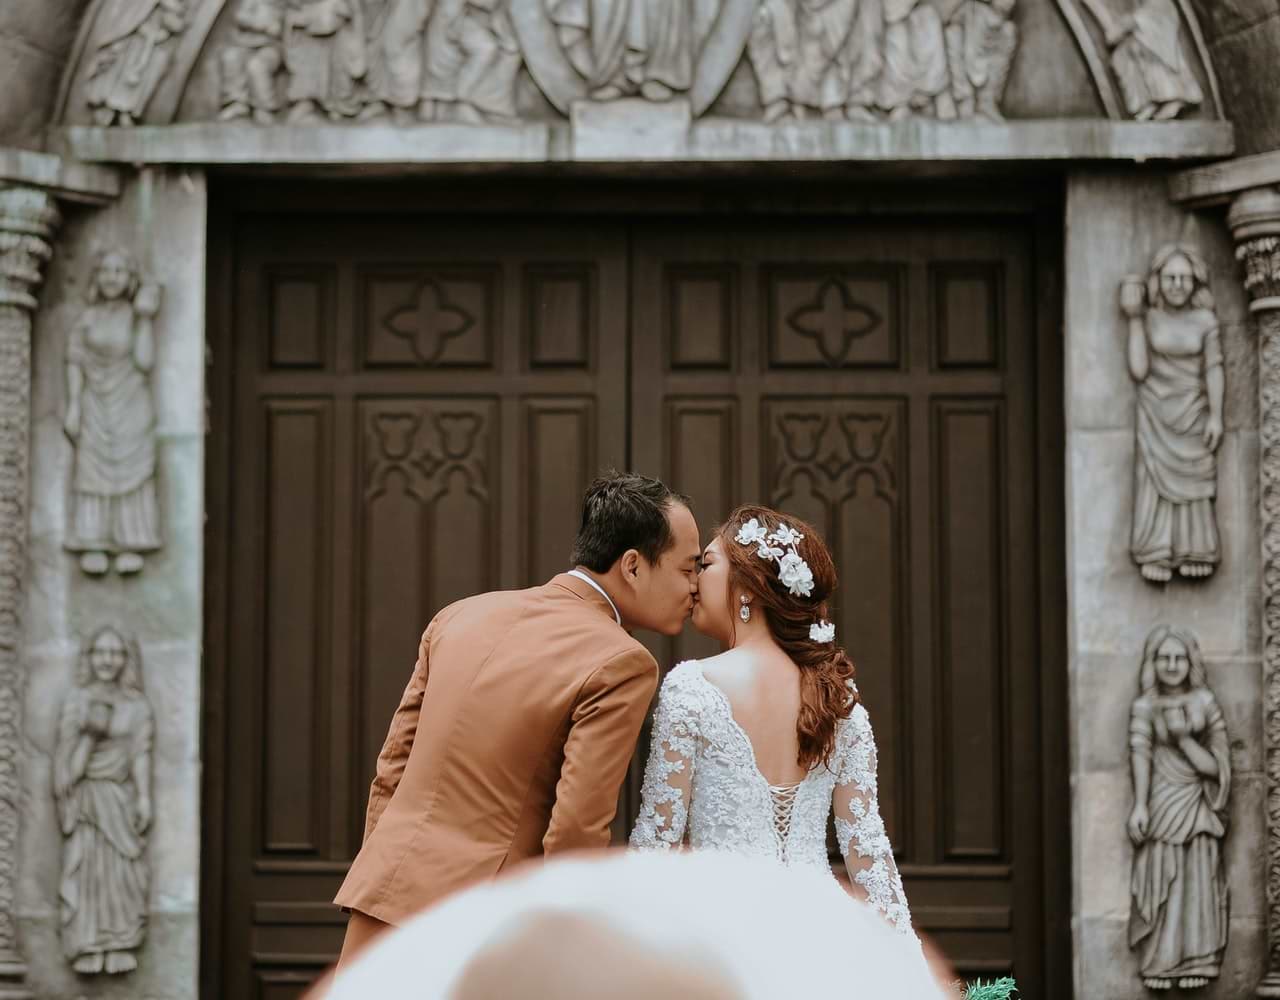 Filipino couple kiss outside church